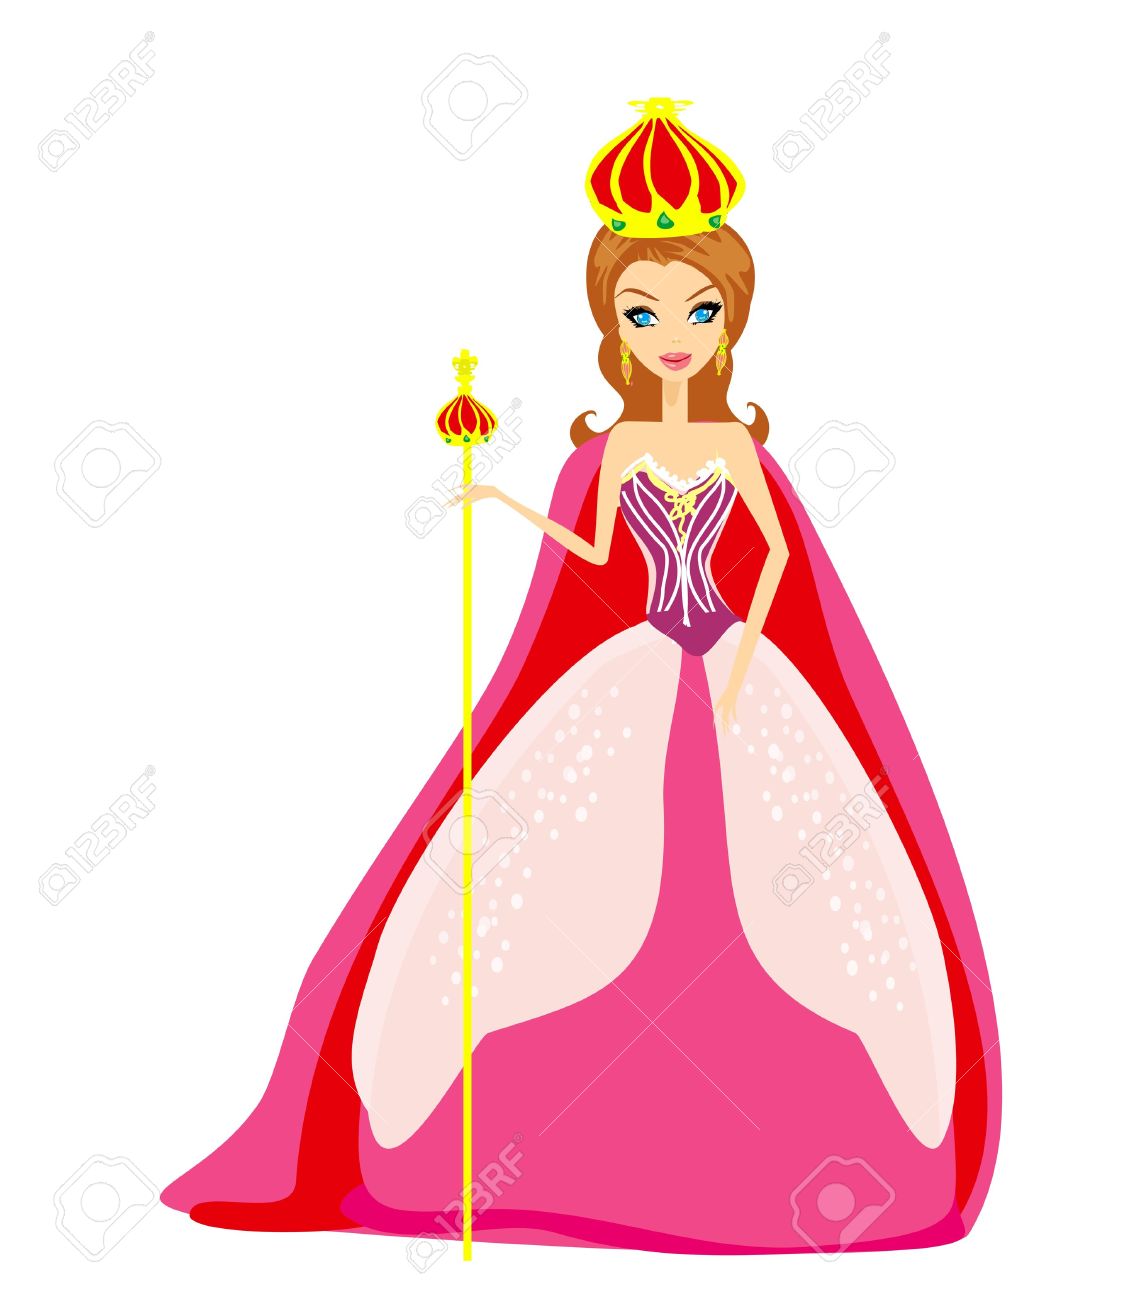 Queen crown illustration.